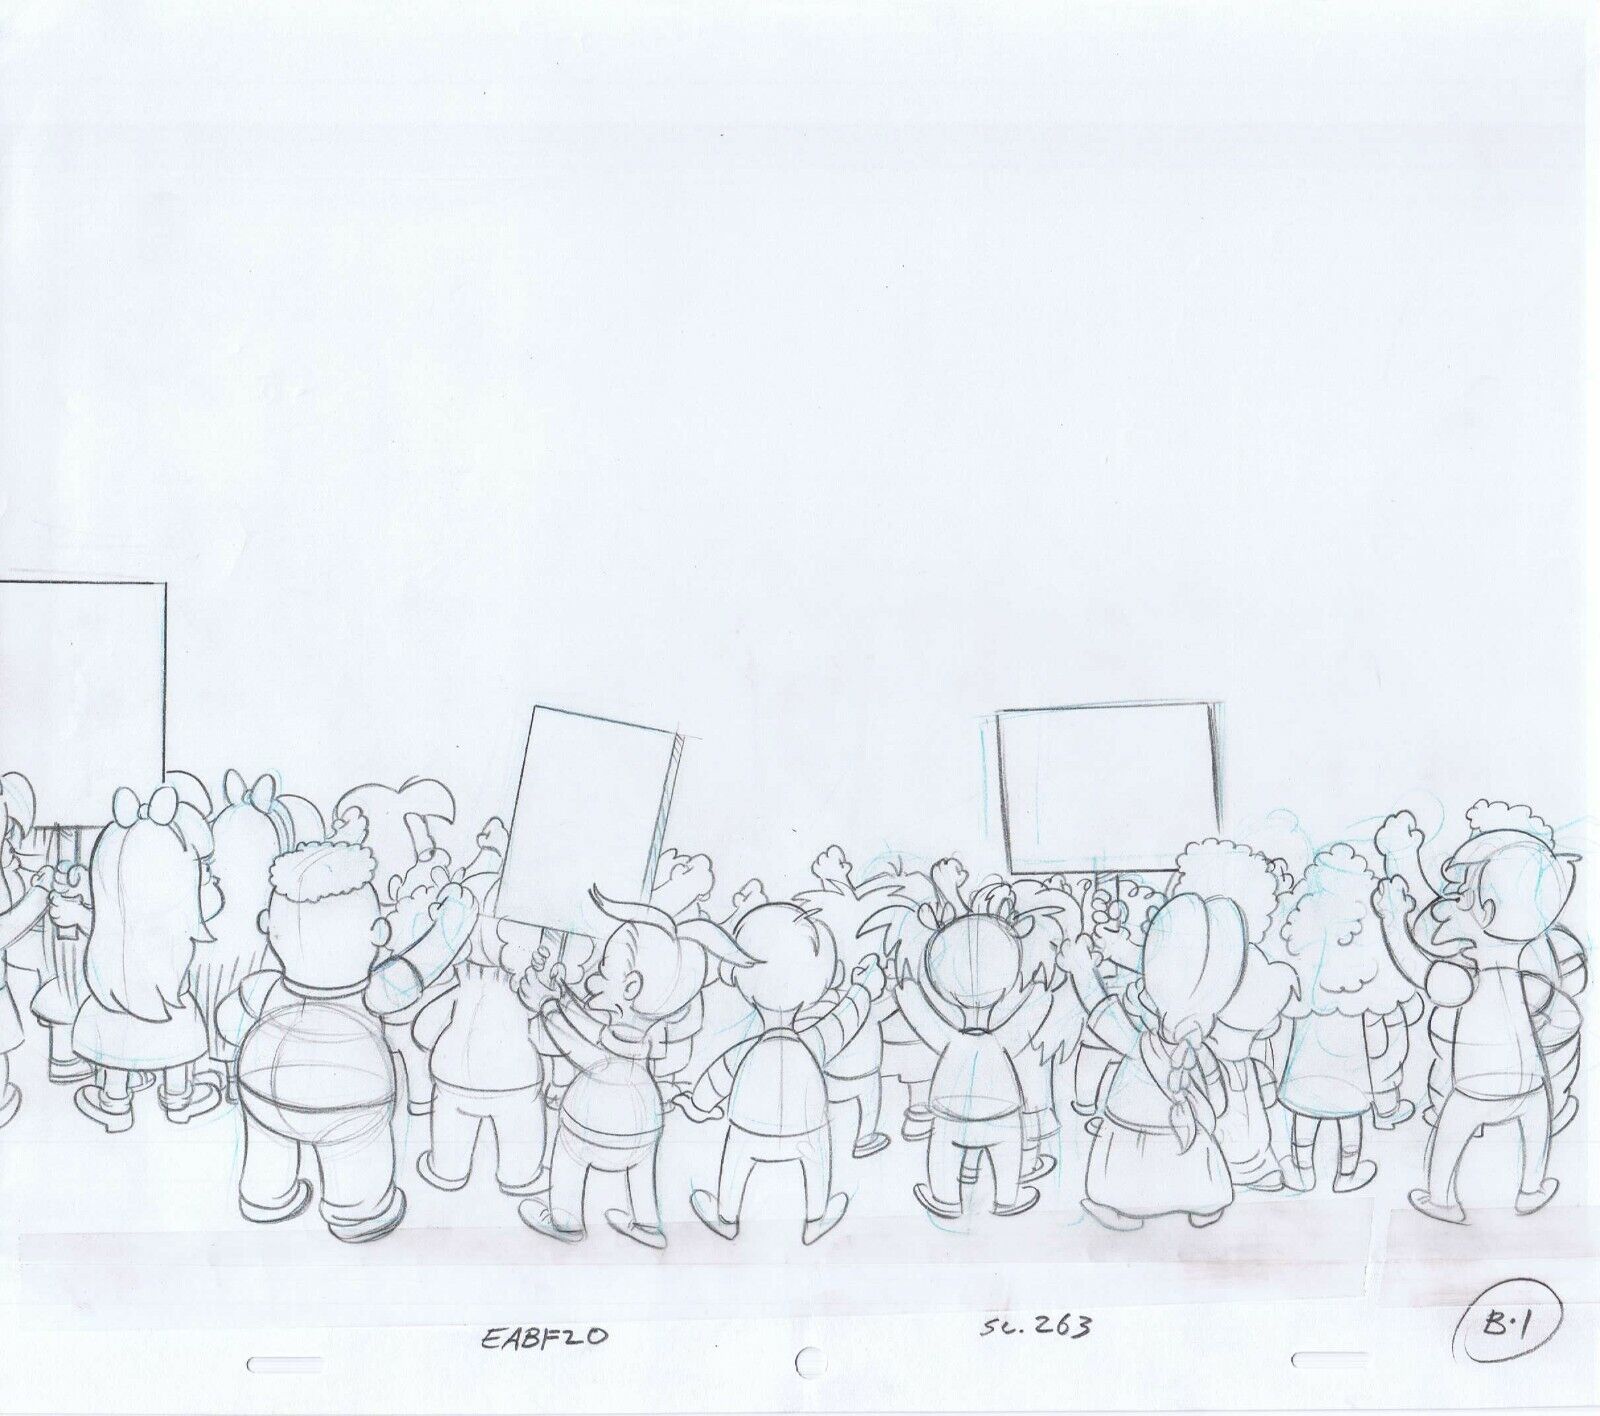 Simpsons Kids 2003 Original Art w/COA Animation Production Pencil SC 263 B-1